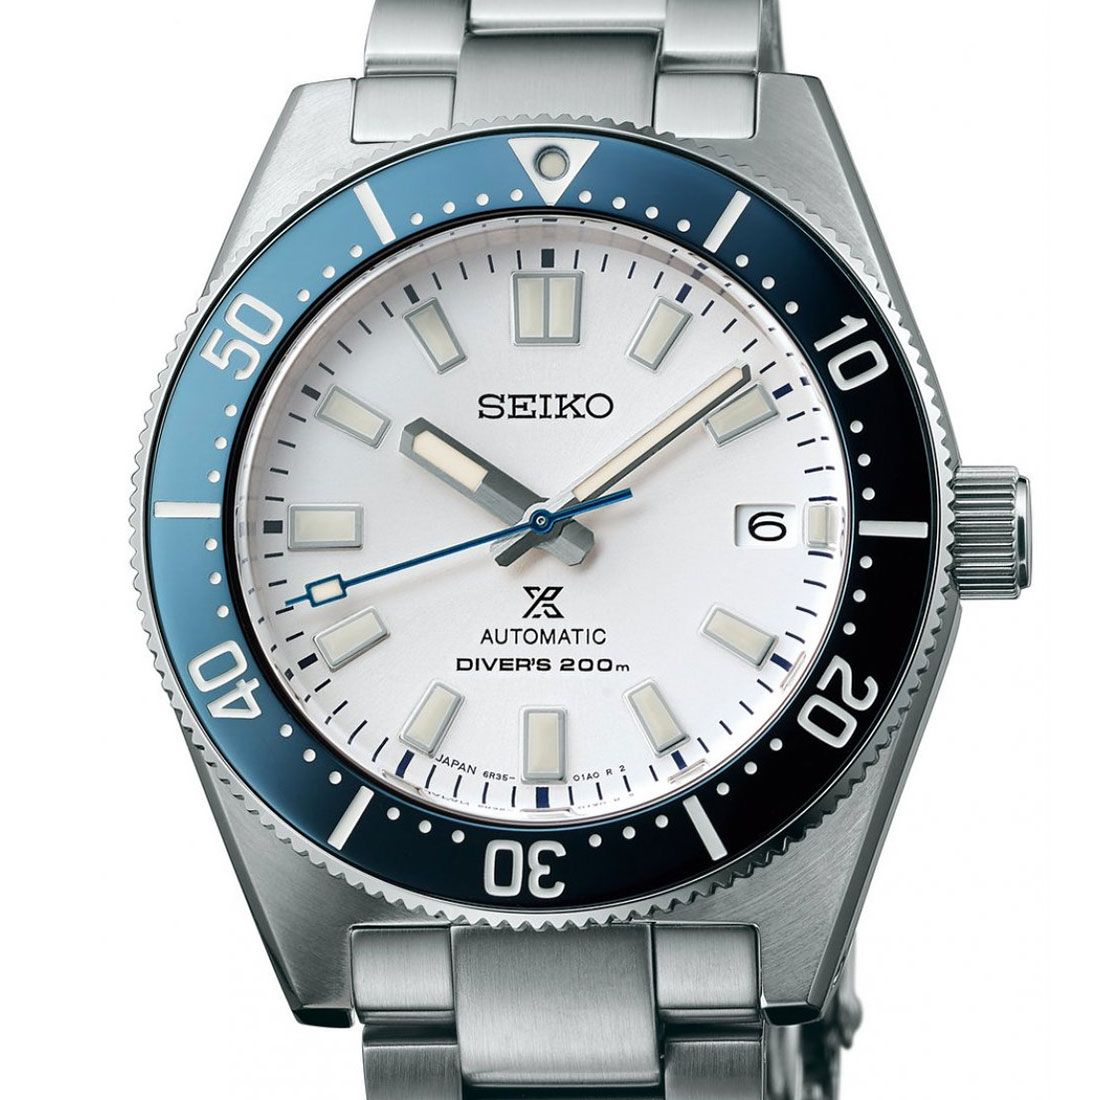 Seiko Prospex Anniversary Divers Silver Dial JDM Watch SBDC139 -Seiko